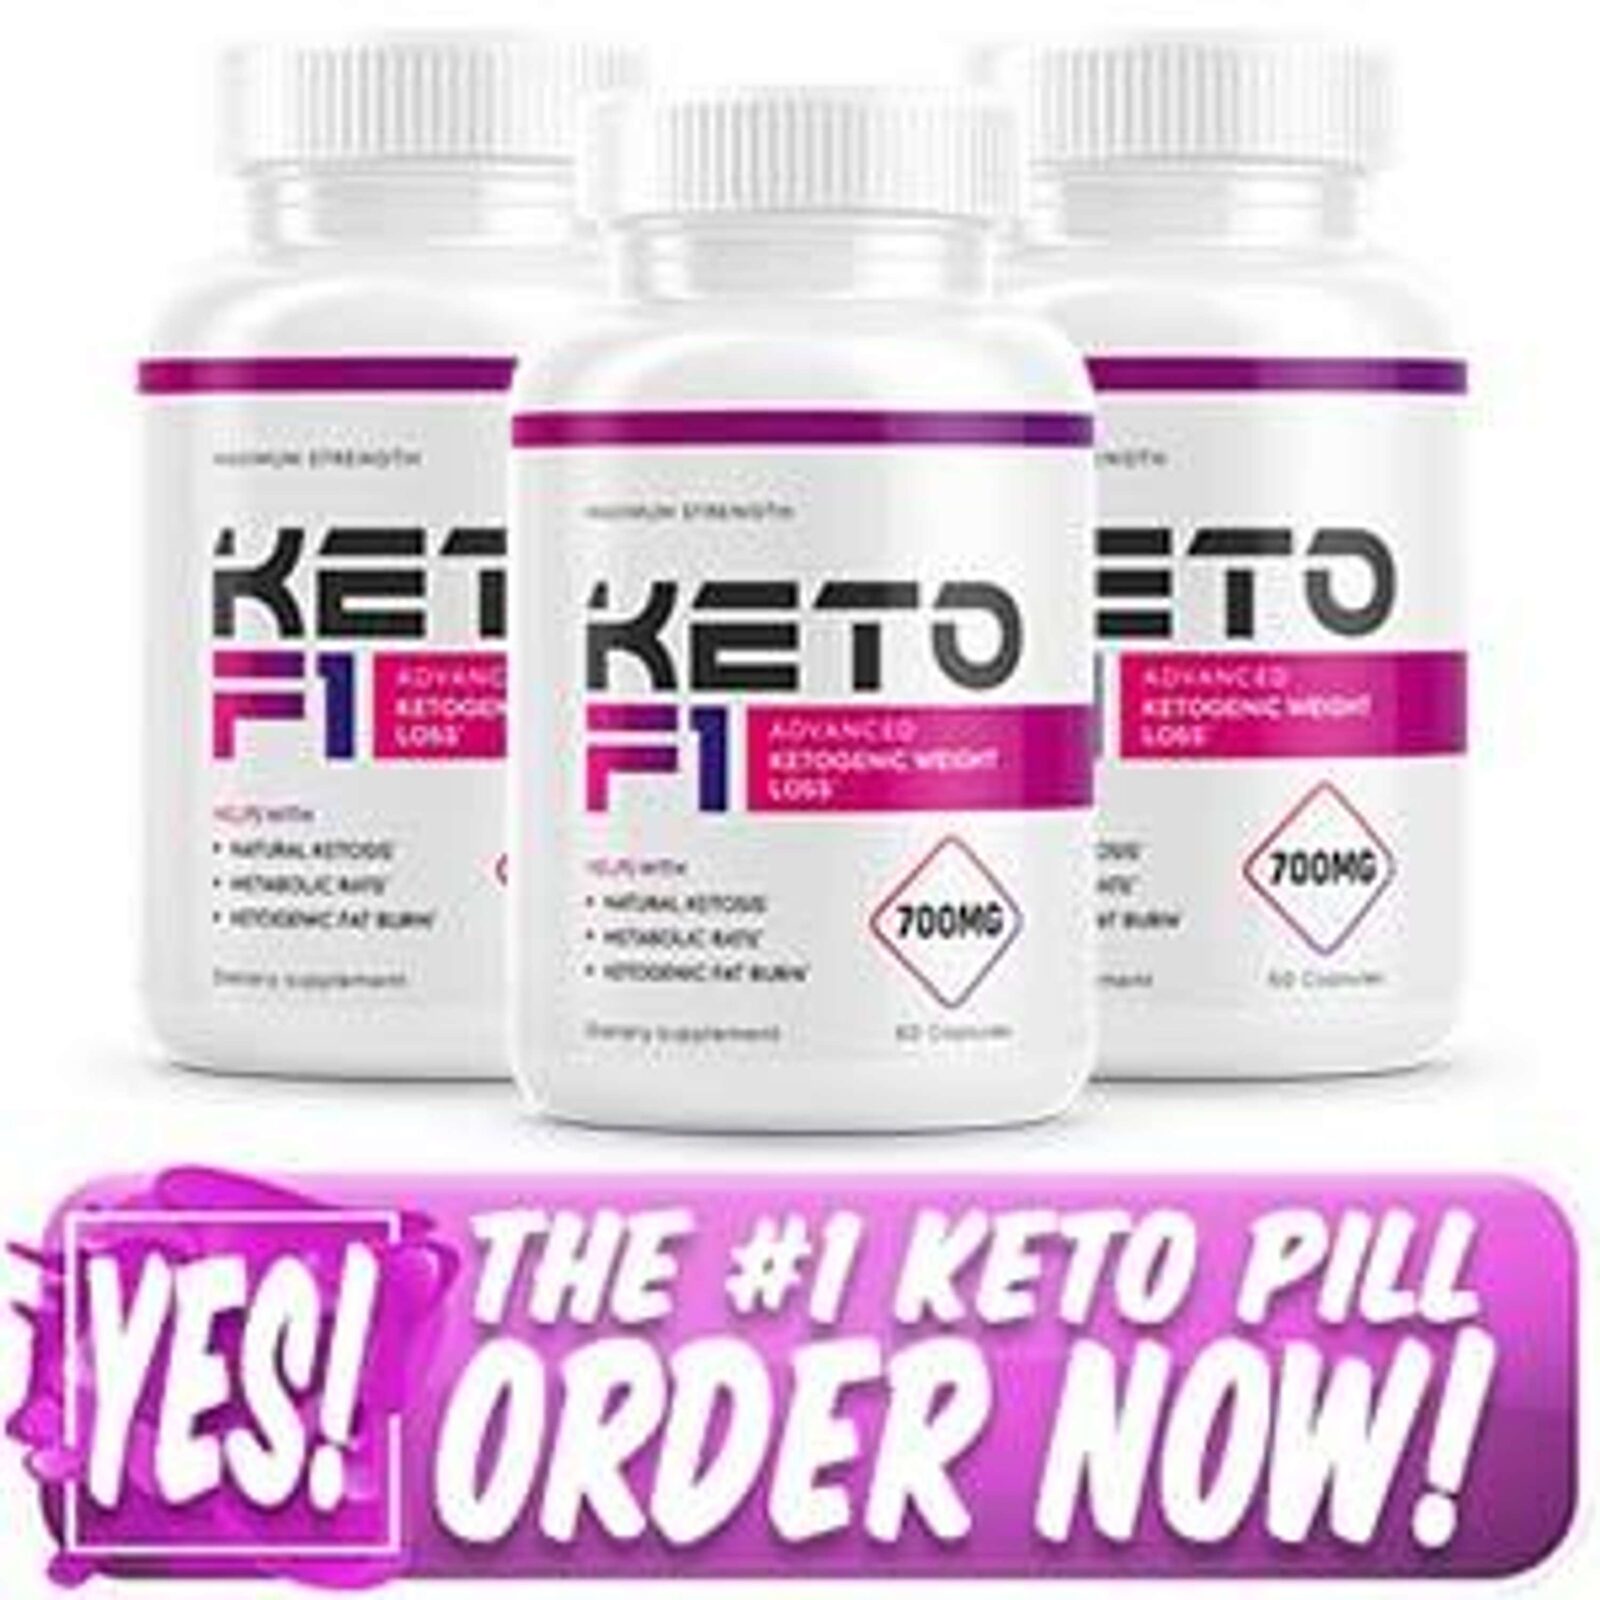 Keto F1: Best Weightloss Supplement, Benefits, Reviews and ...